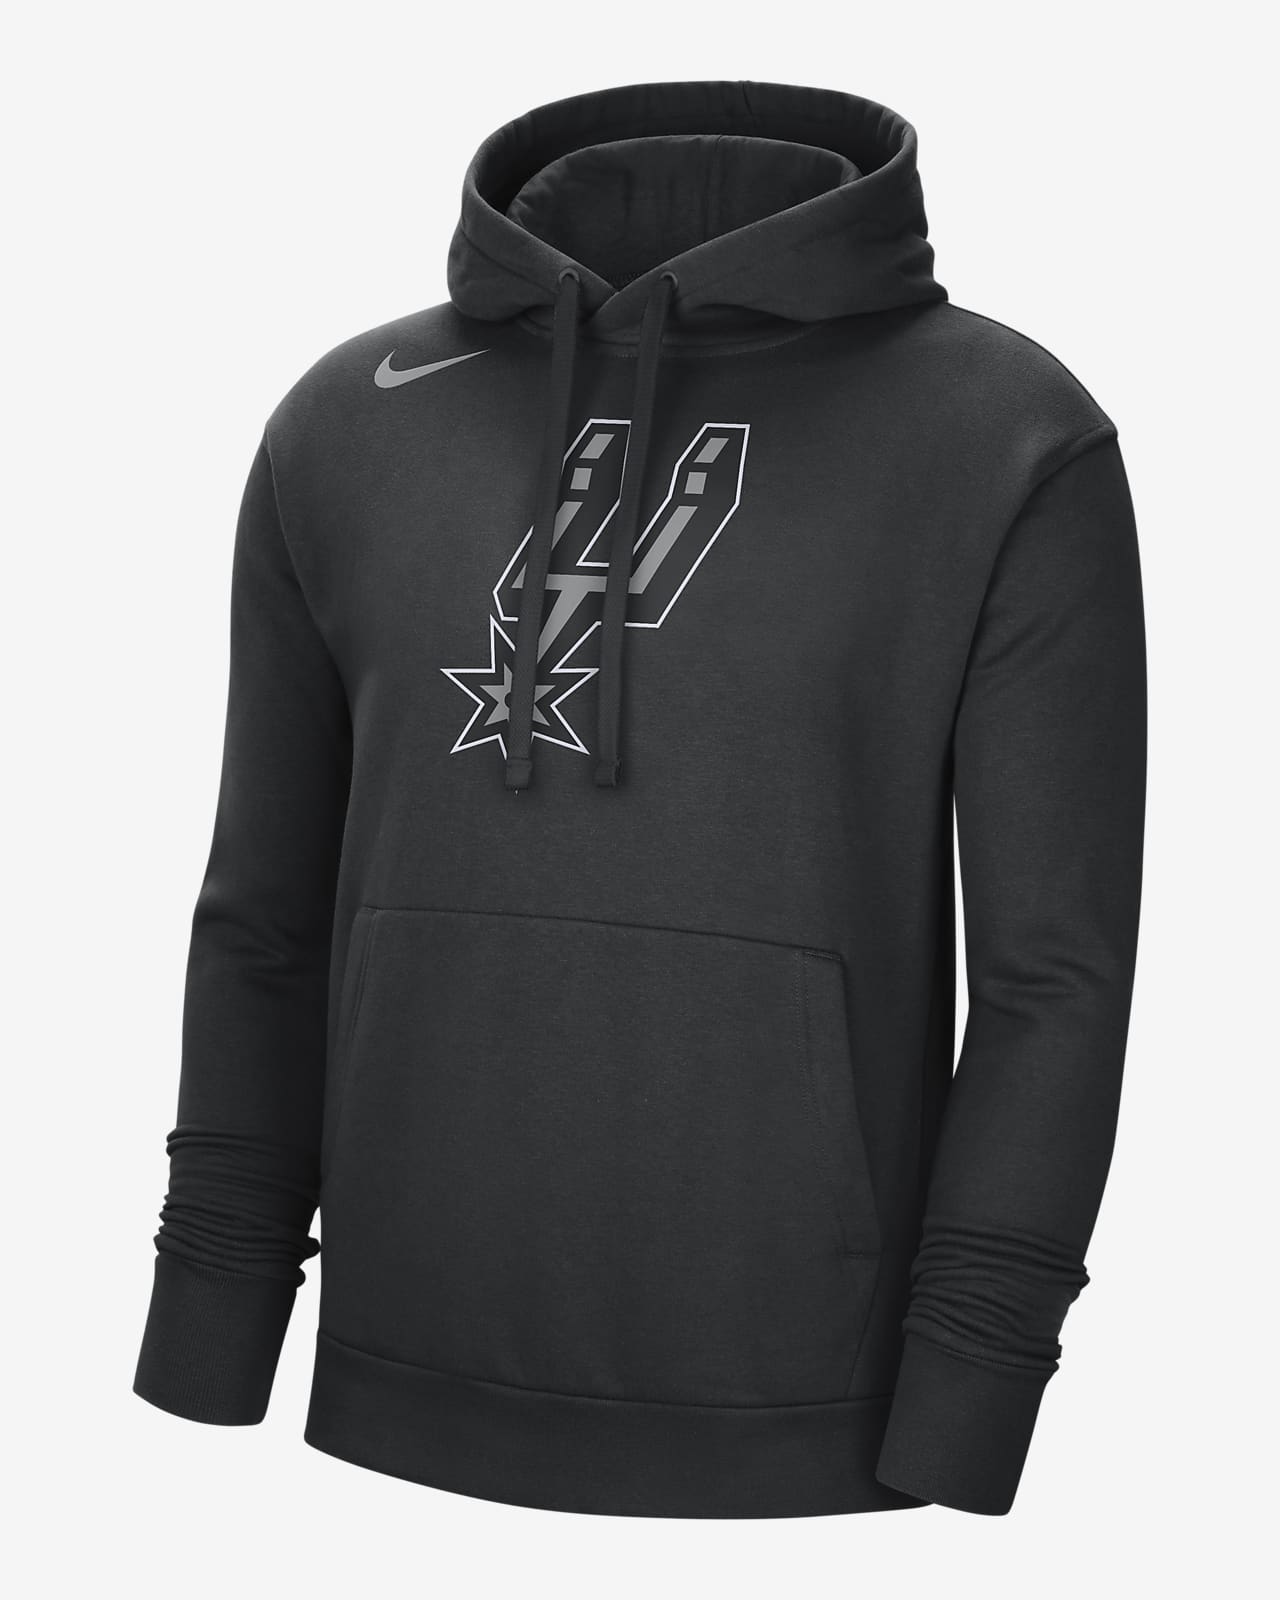 San Antonio Spurs Hoodie, Spurs Sweatshirts, Spurs Fleece